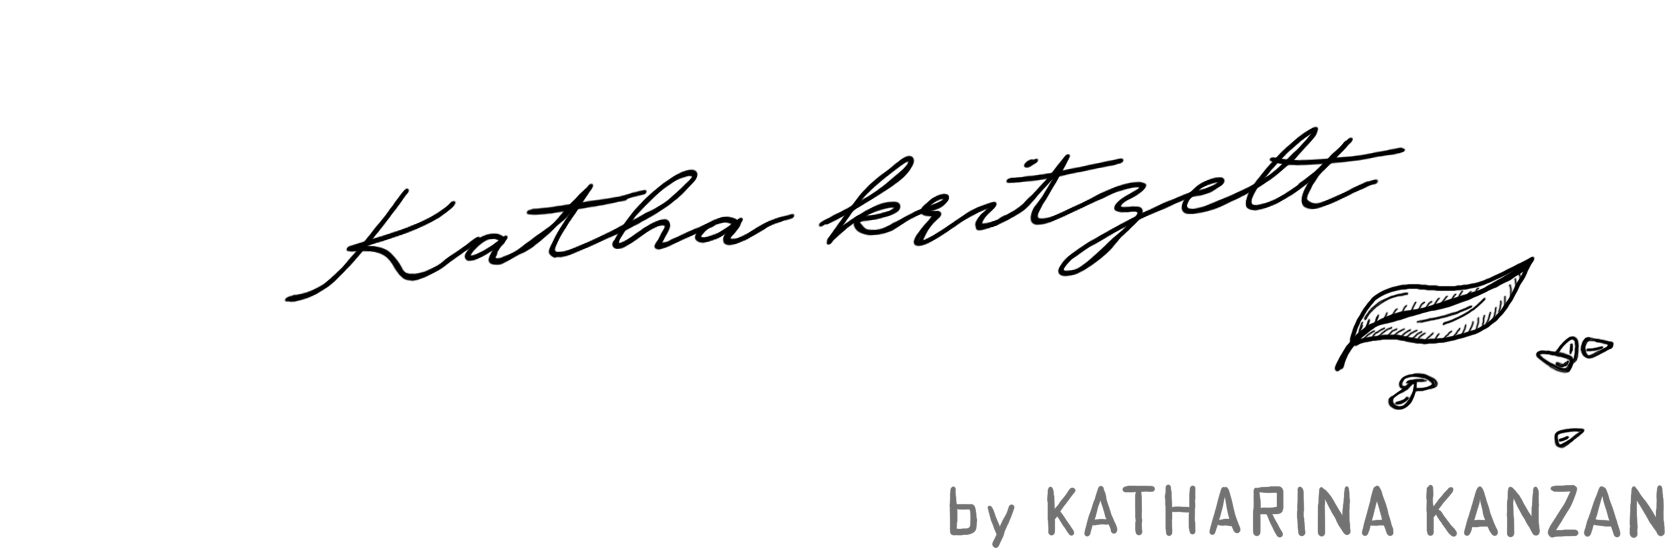 Katha kritzelt by Katharina Kanzan